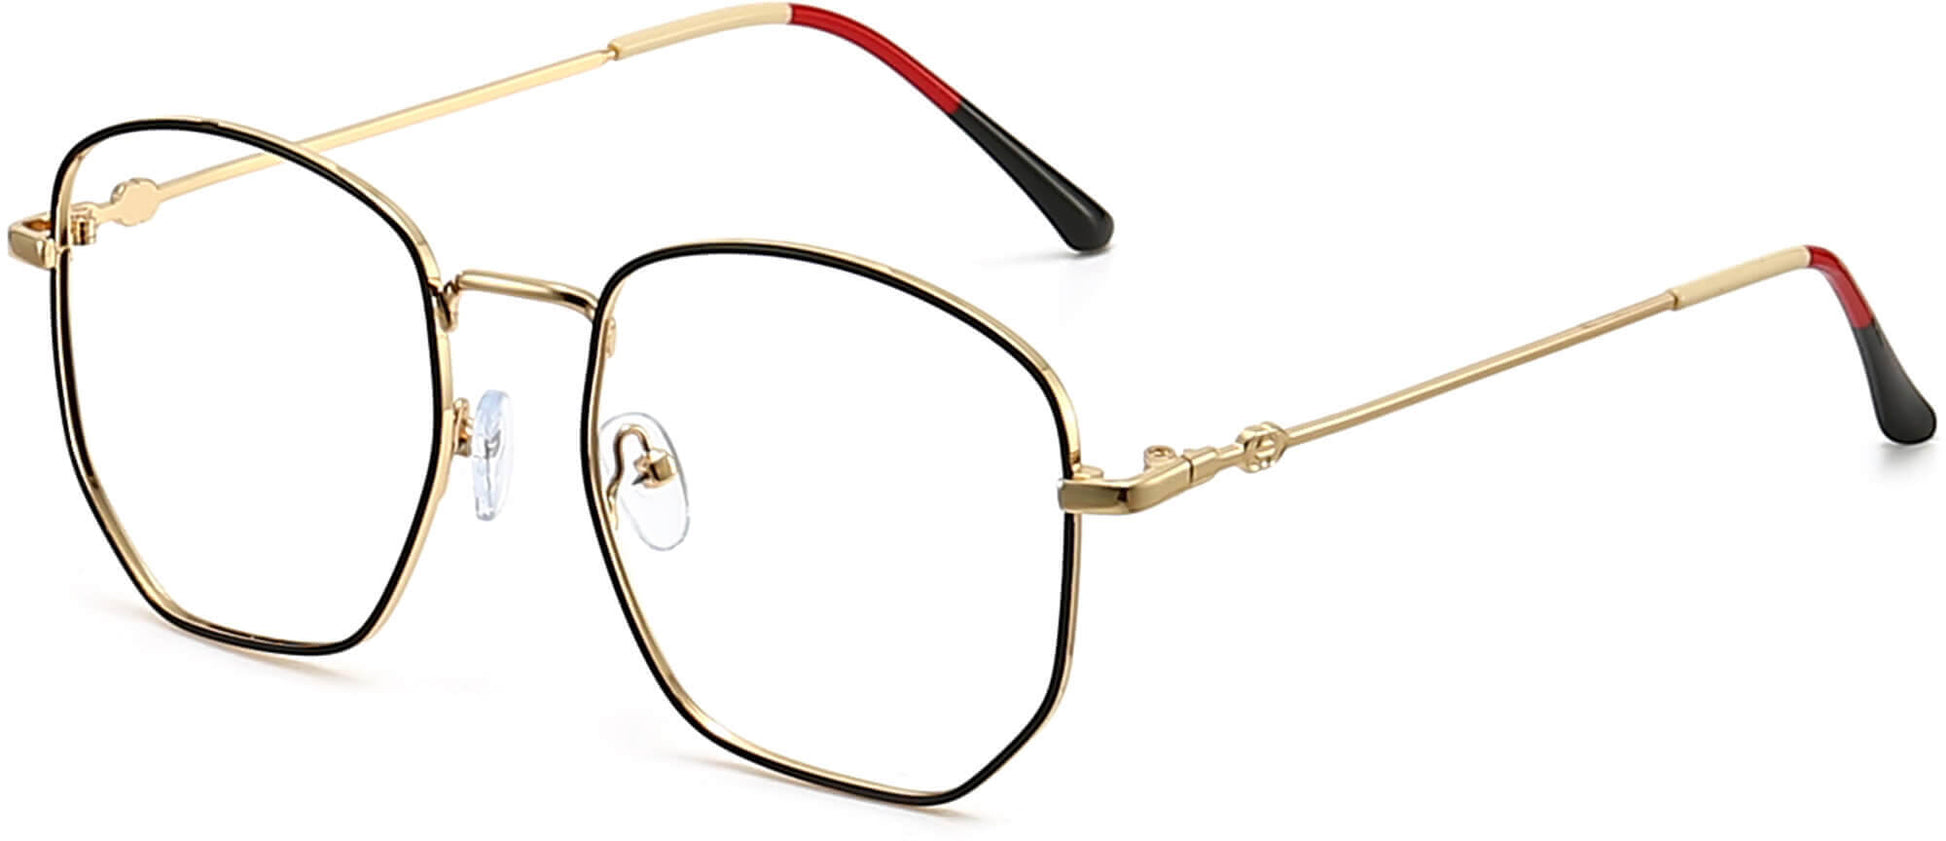 Leighton Geometric Black Eyeglasses from ANRRI, angle view